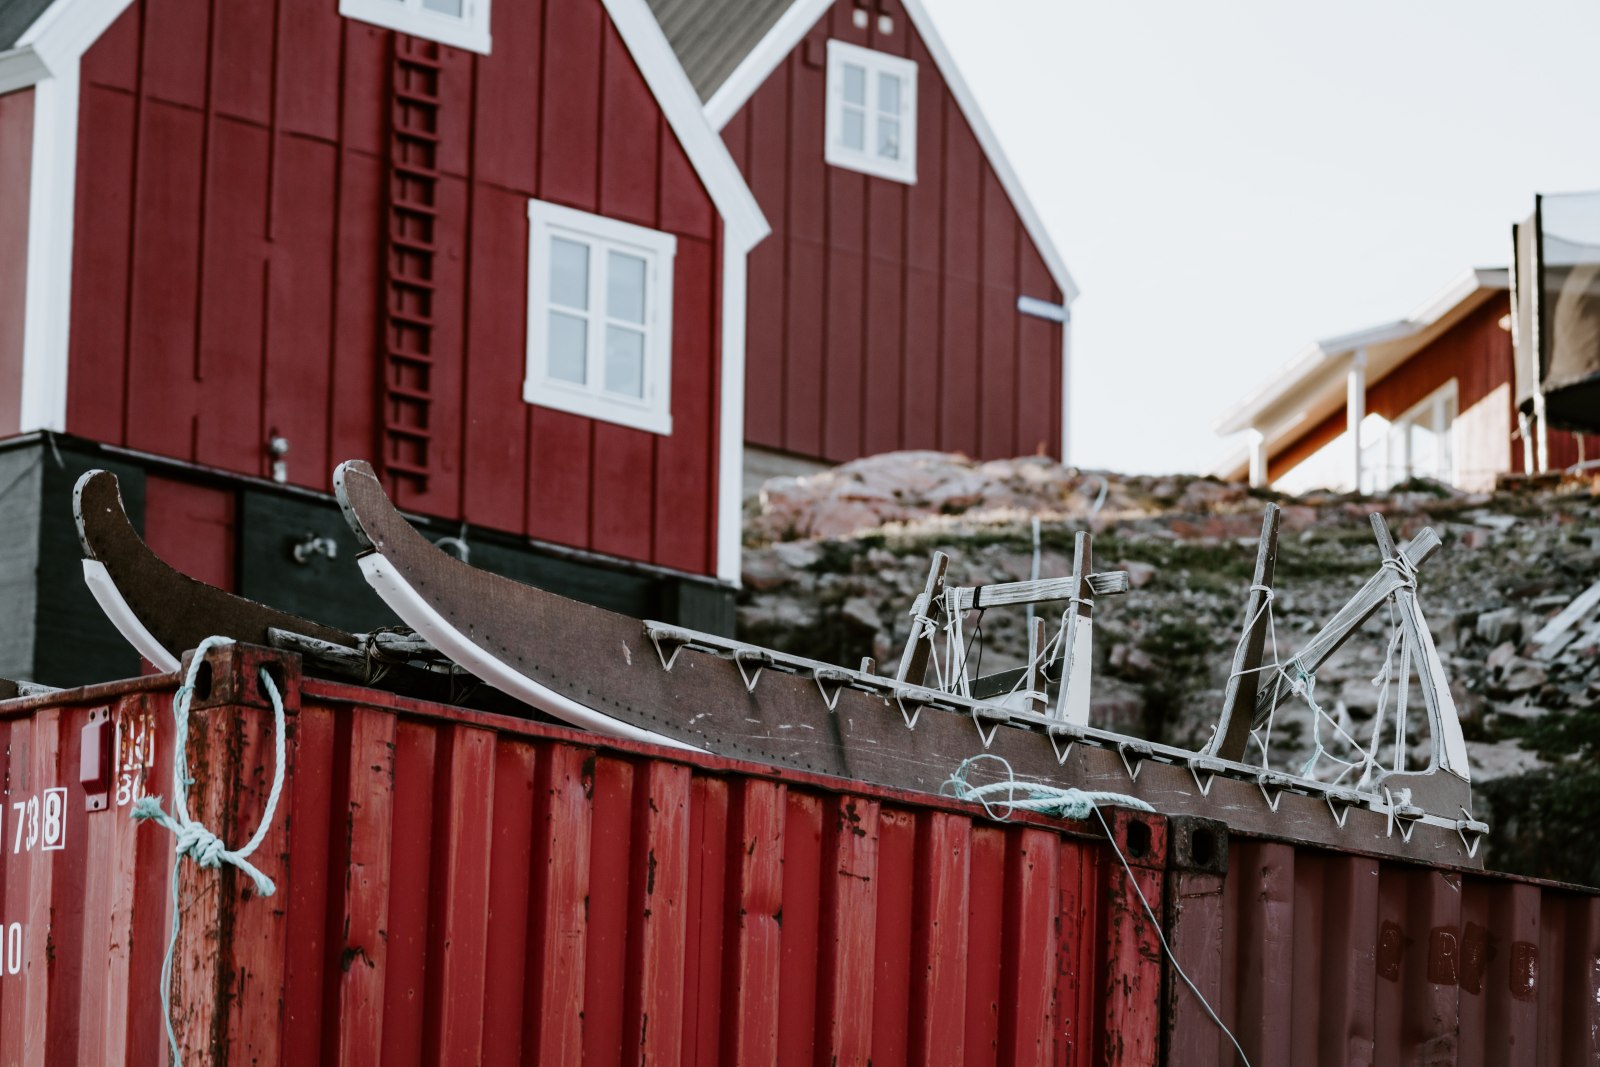 Huse og vinterslæde, Grønland